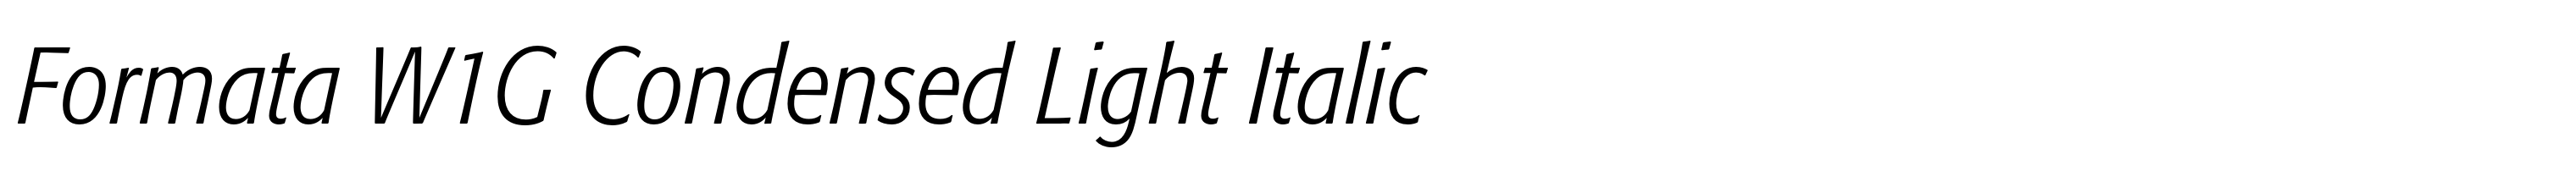 Formata W1G Condensed Light Italic